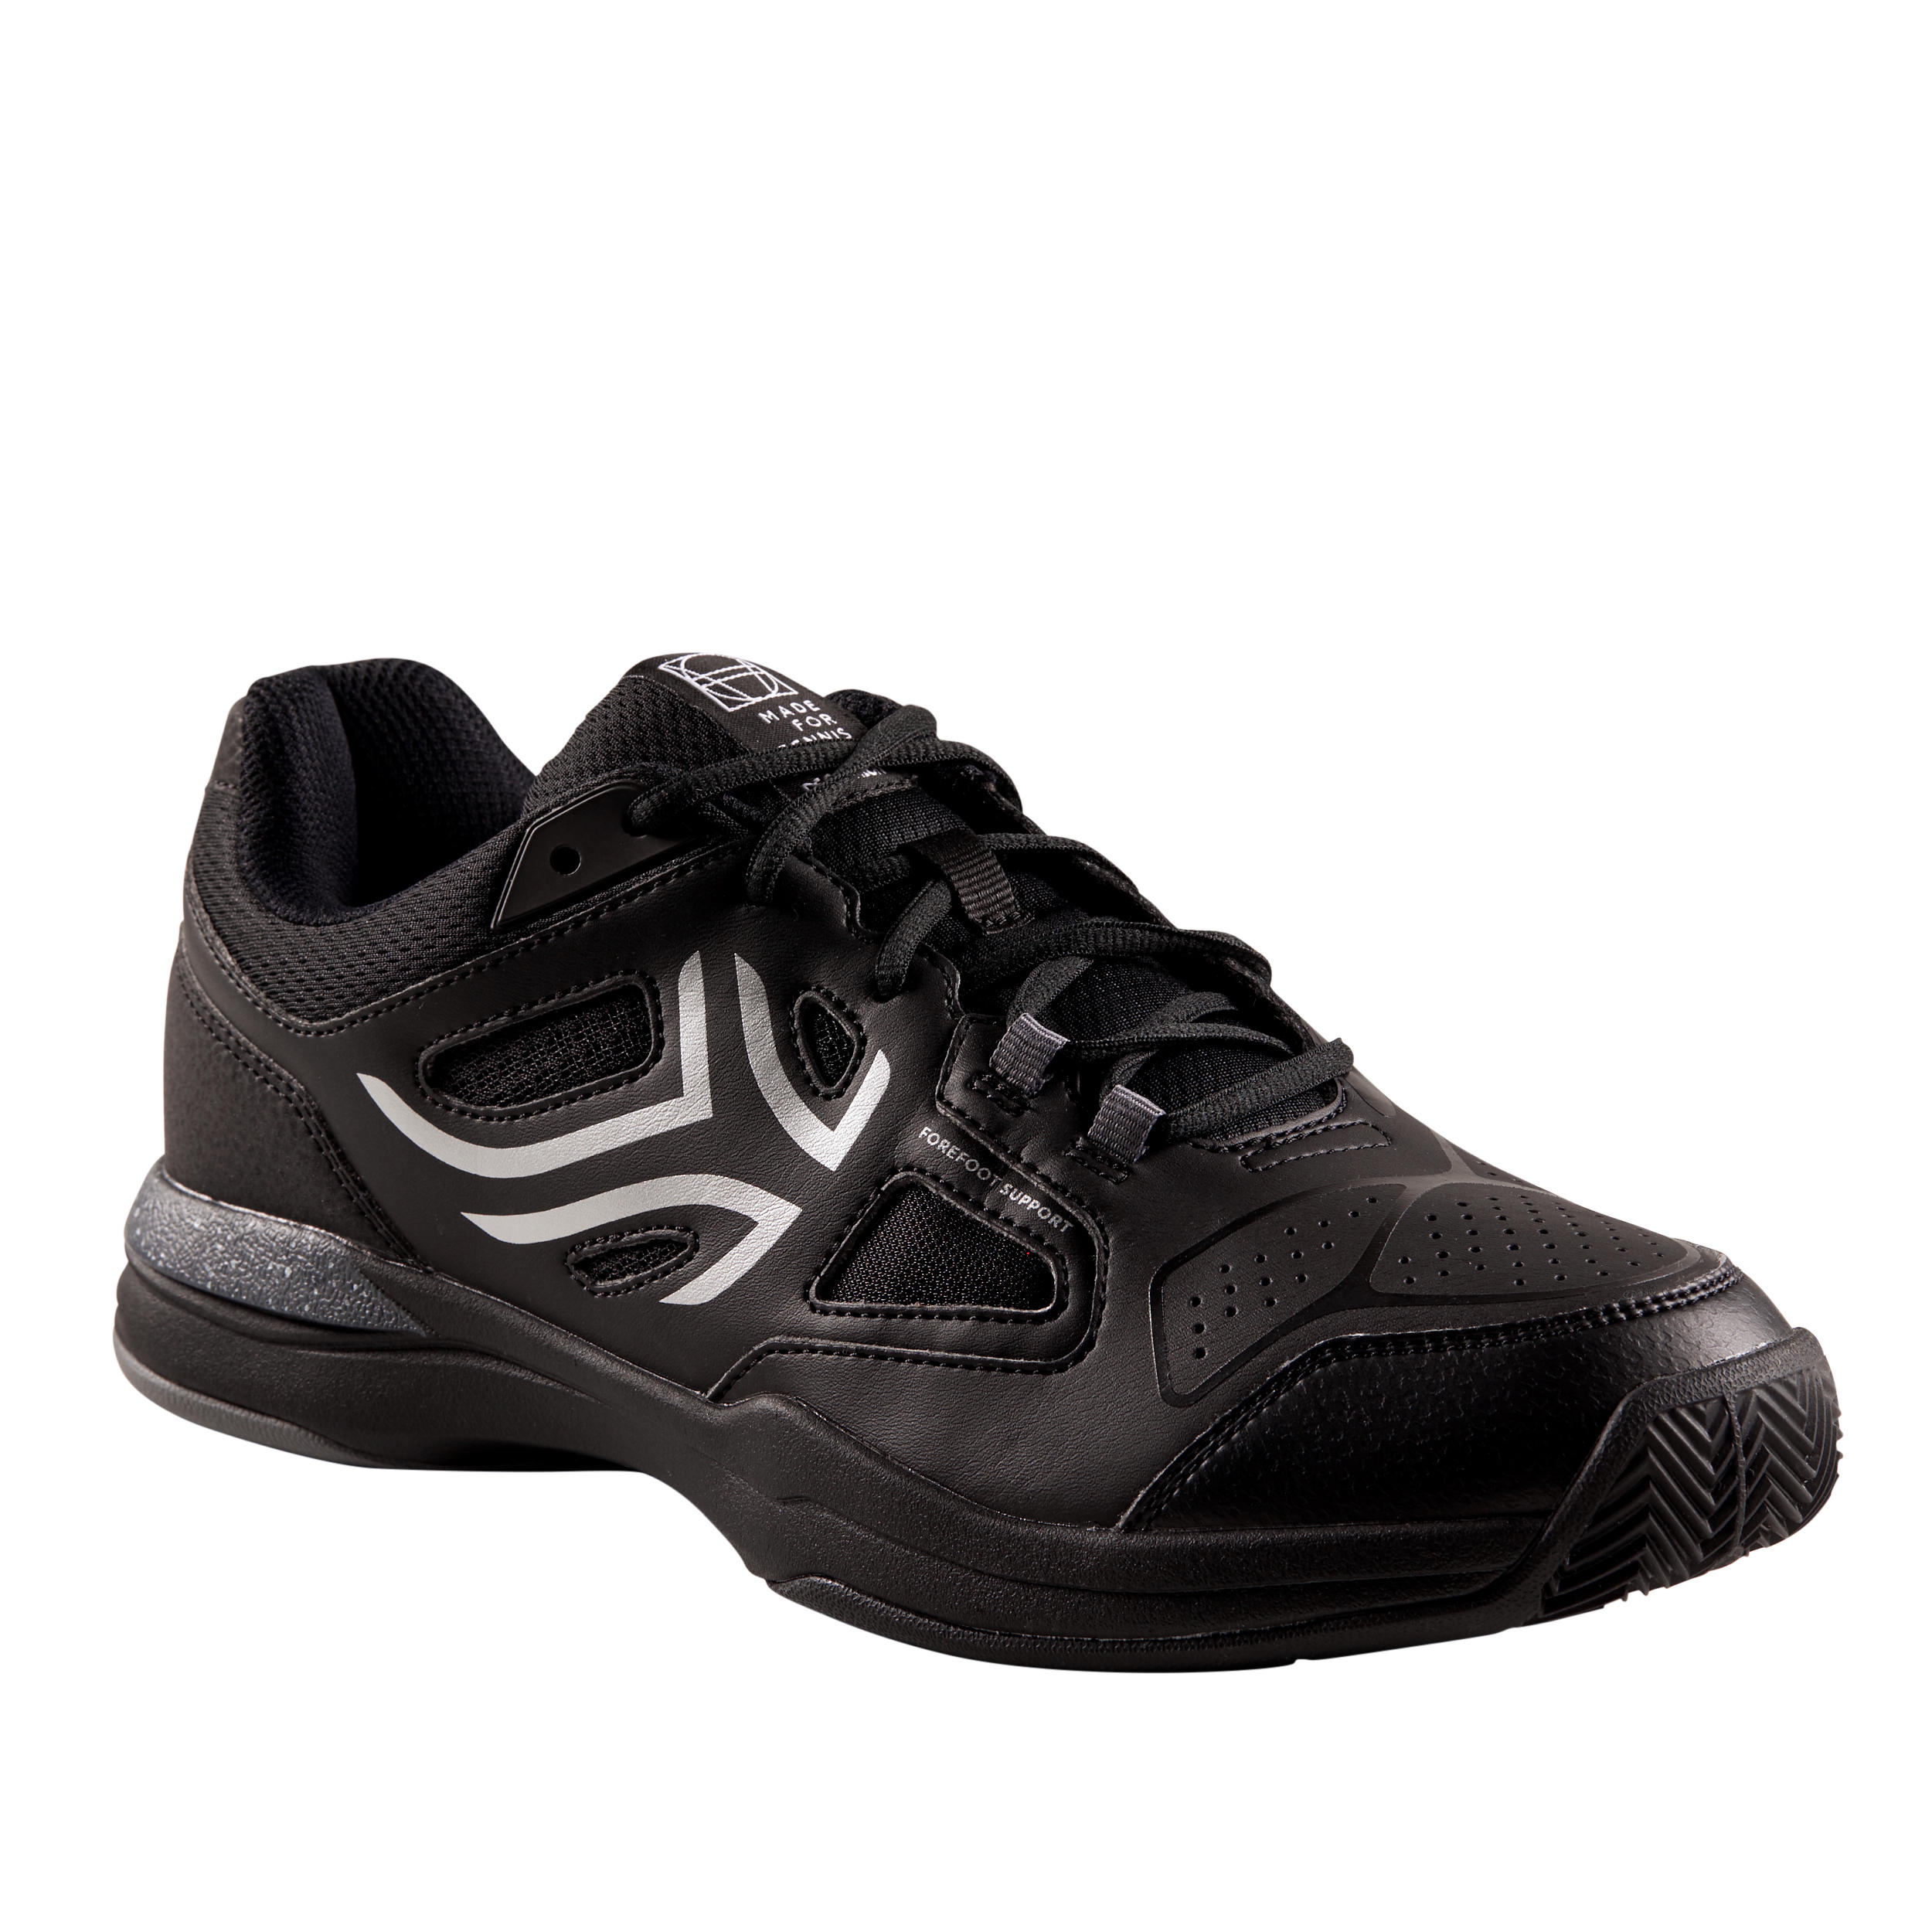 Men's Clay Court Tennis Shoes TS 500 - Black/Grey 1/8